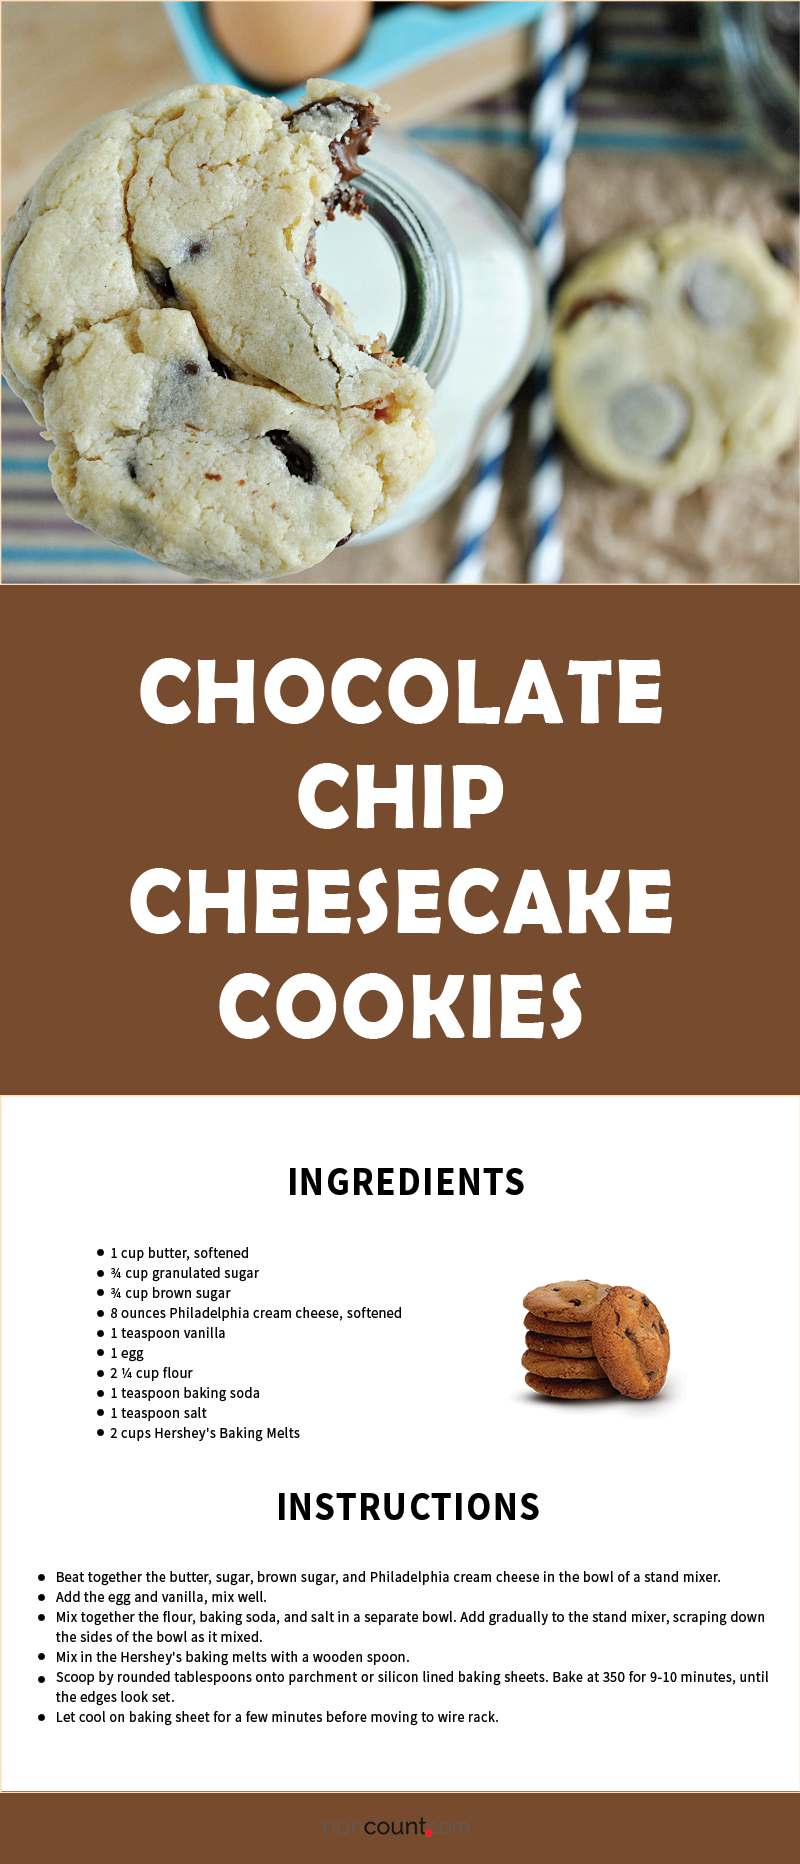 Chocolate Chip Cheesecake Cookies Recipe Image